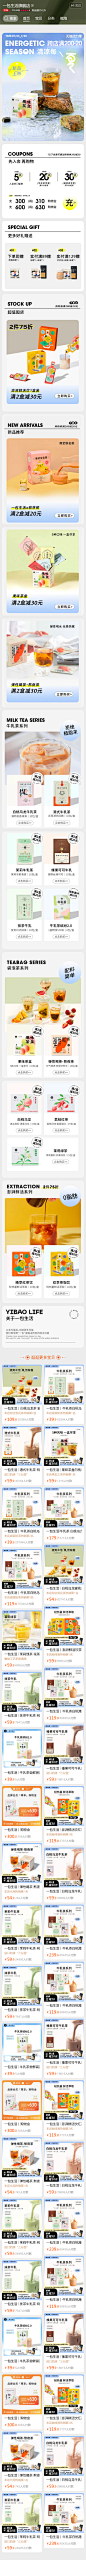 FireShot Pro Webpage Screenshot #007 - '一包生活旗舰店' - yibaoshenghuo.m.tmall